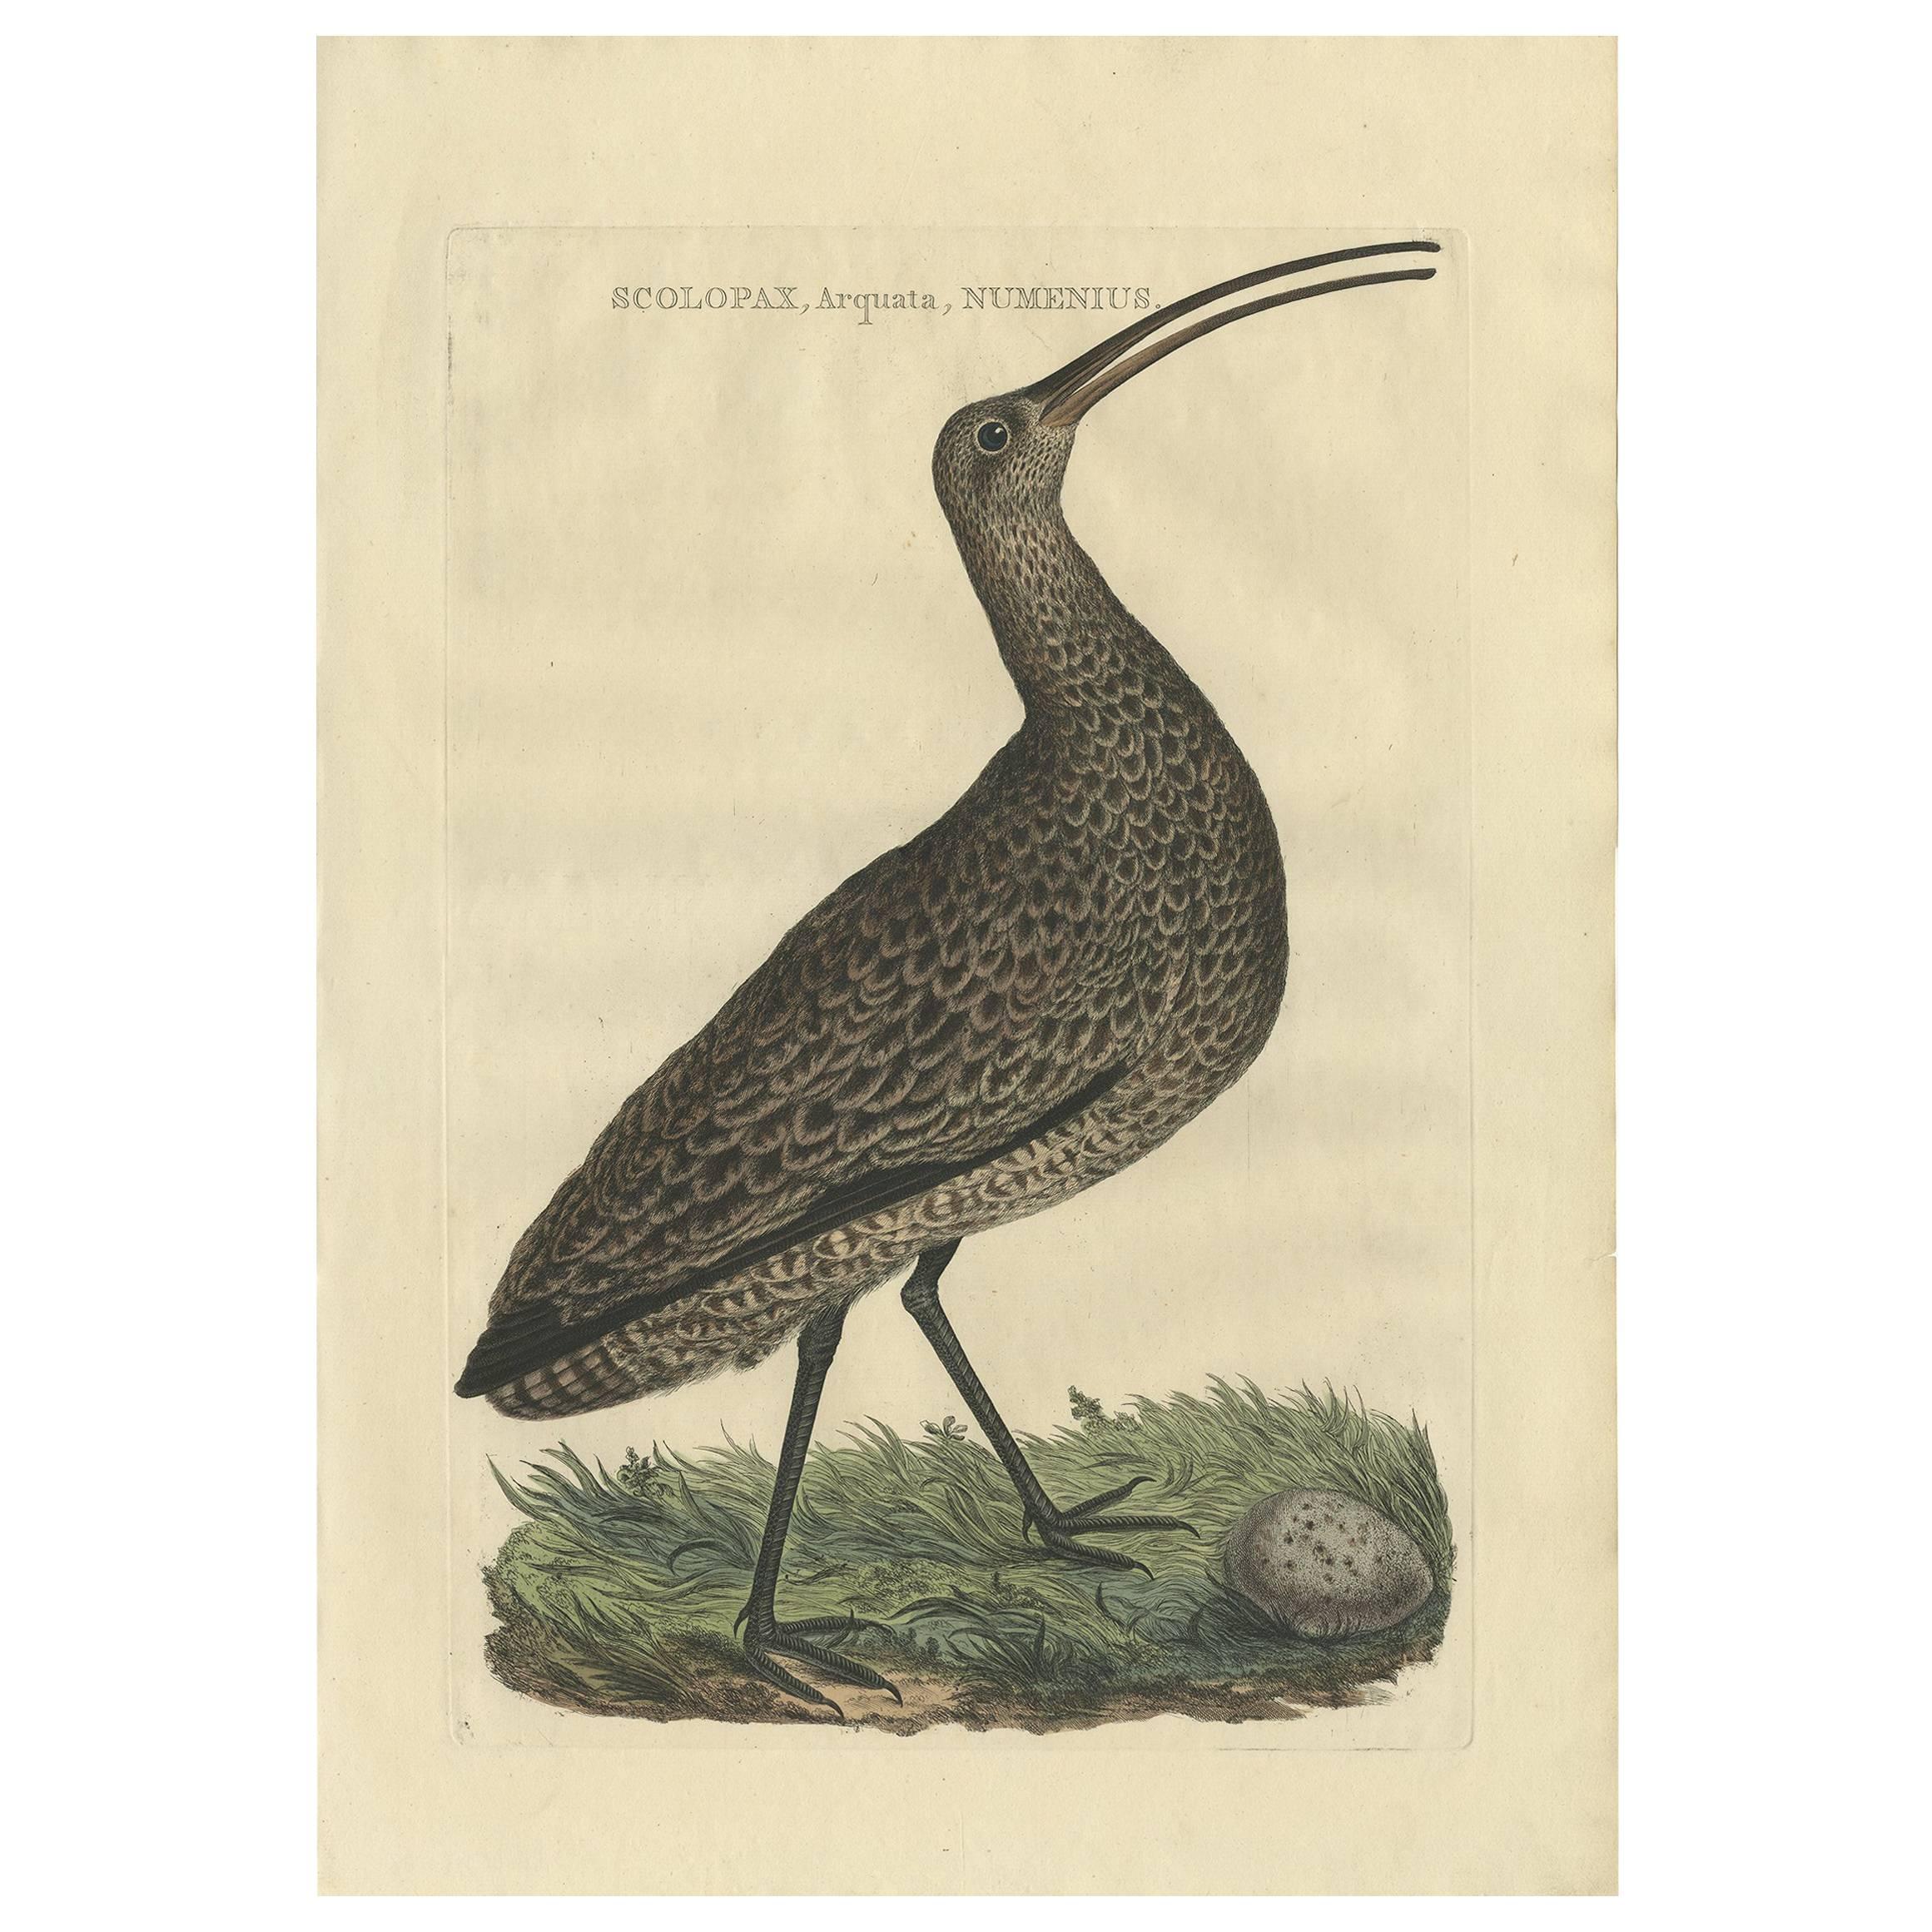 Antique Bird Print of the Eurasian Curlew by Sepp & Nozeman, 1789